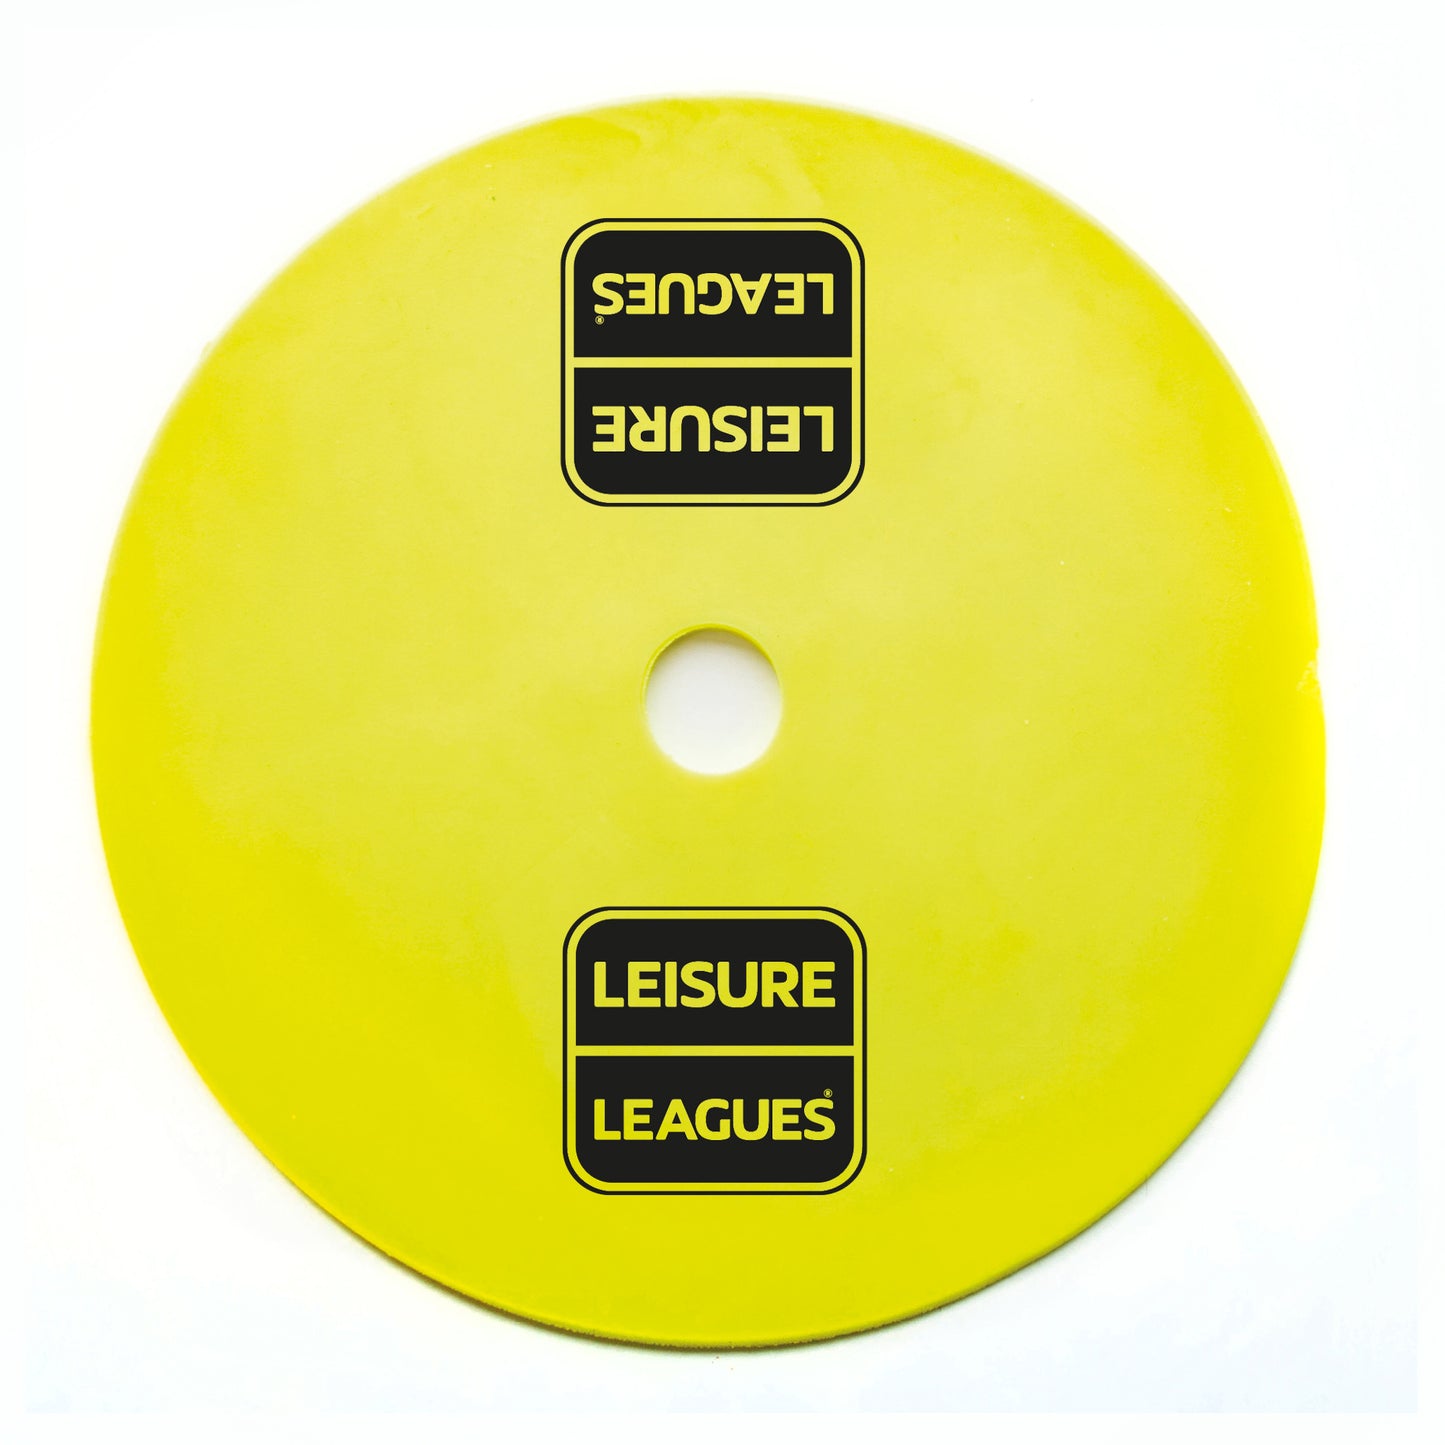  Leisure leagues football   cones equipment